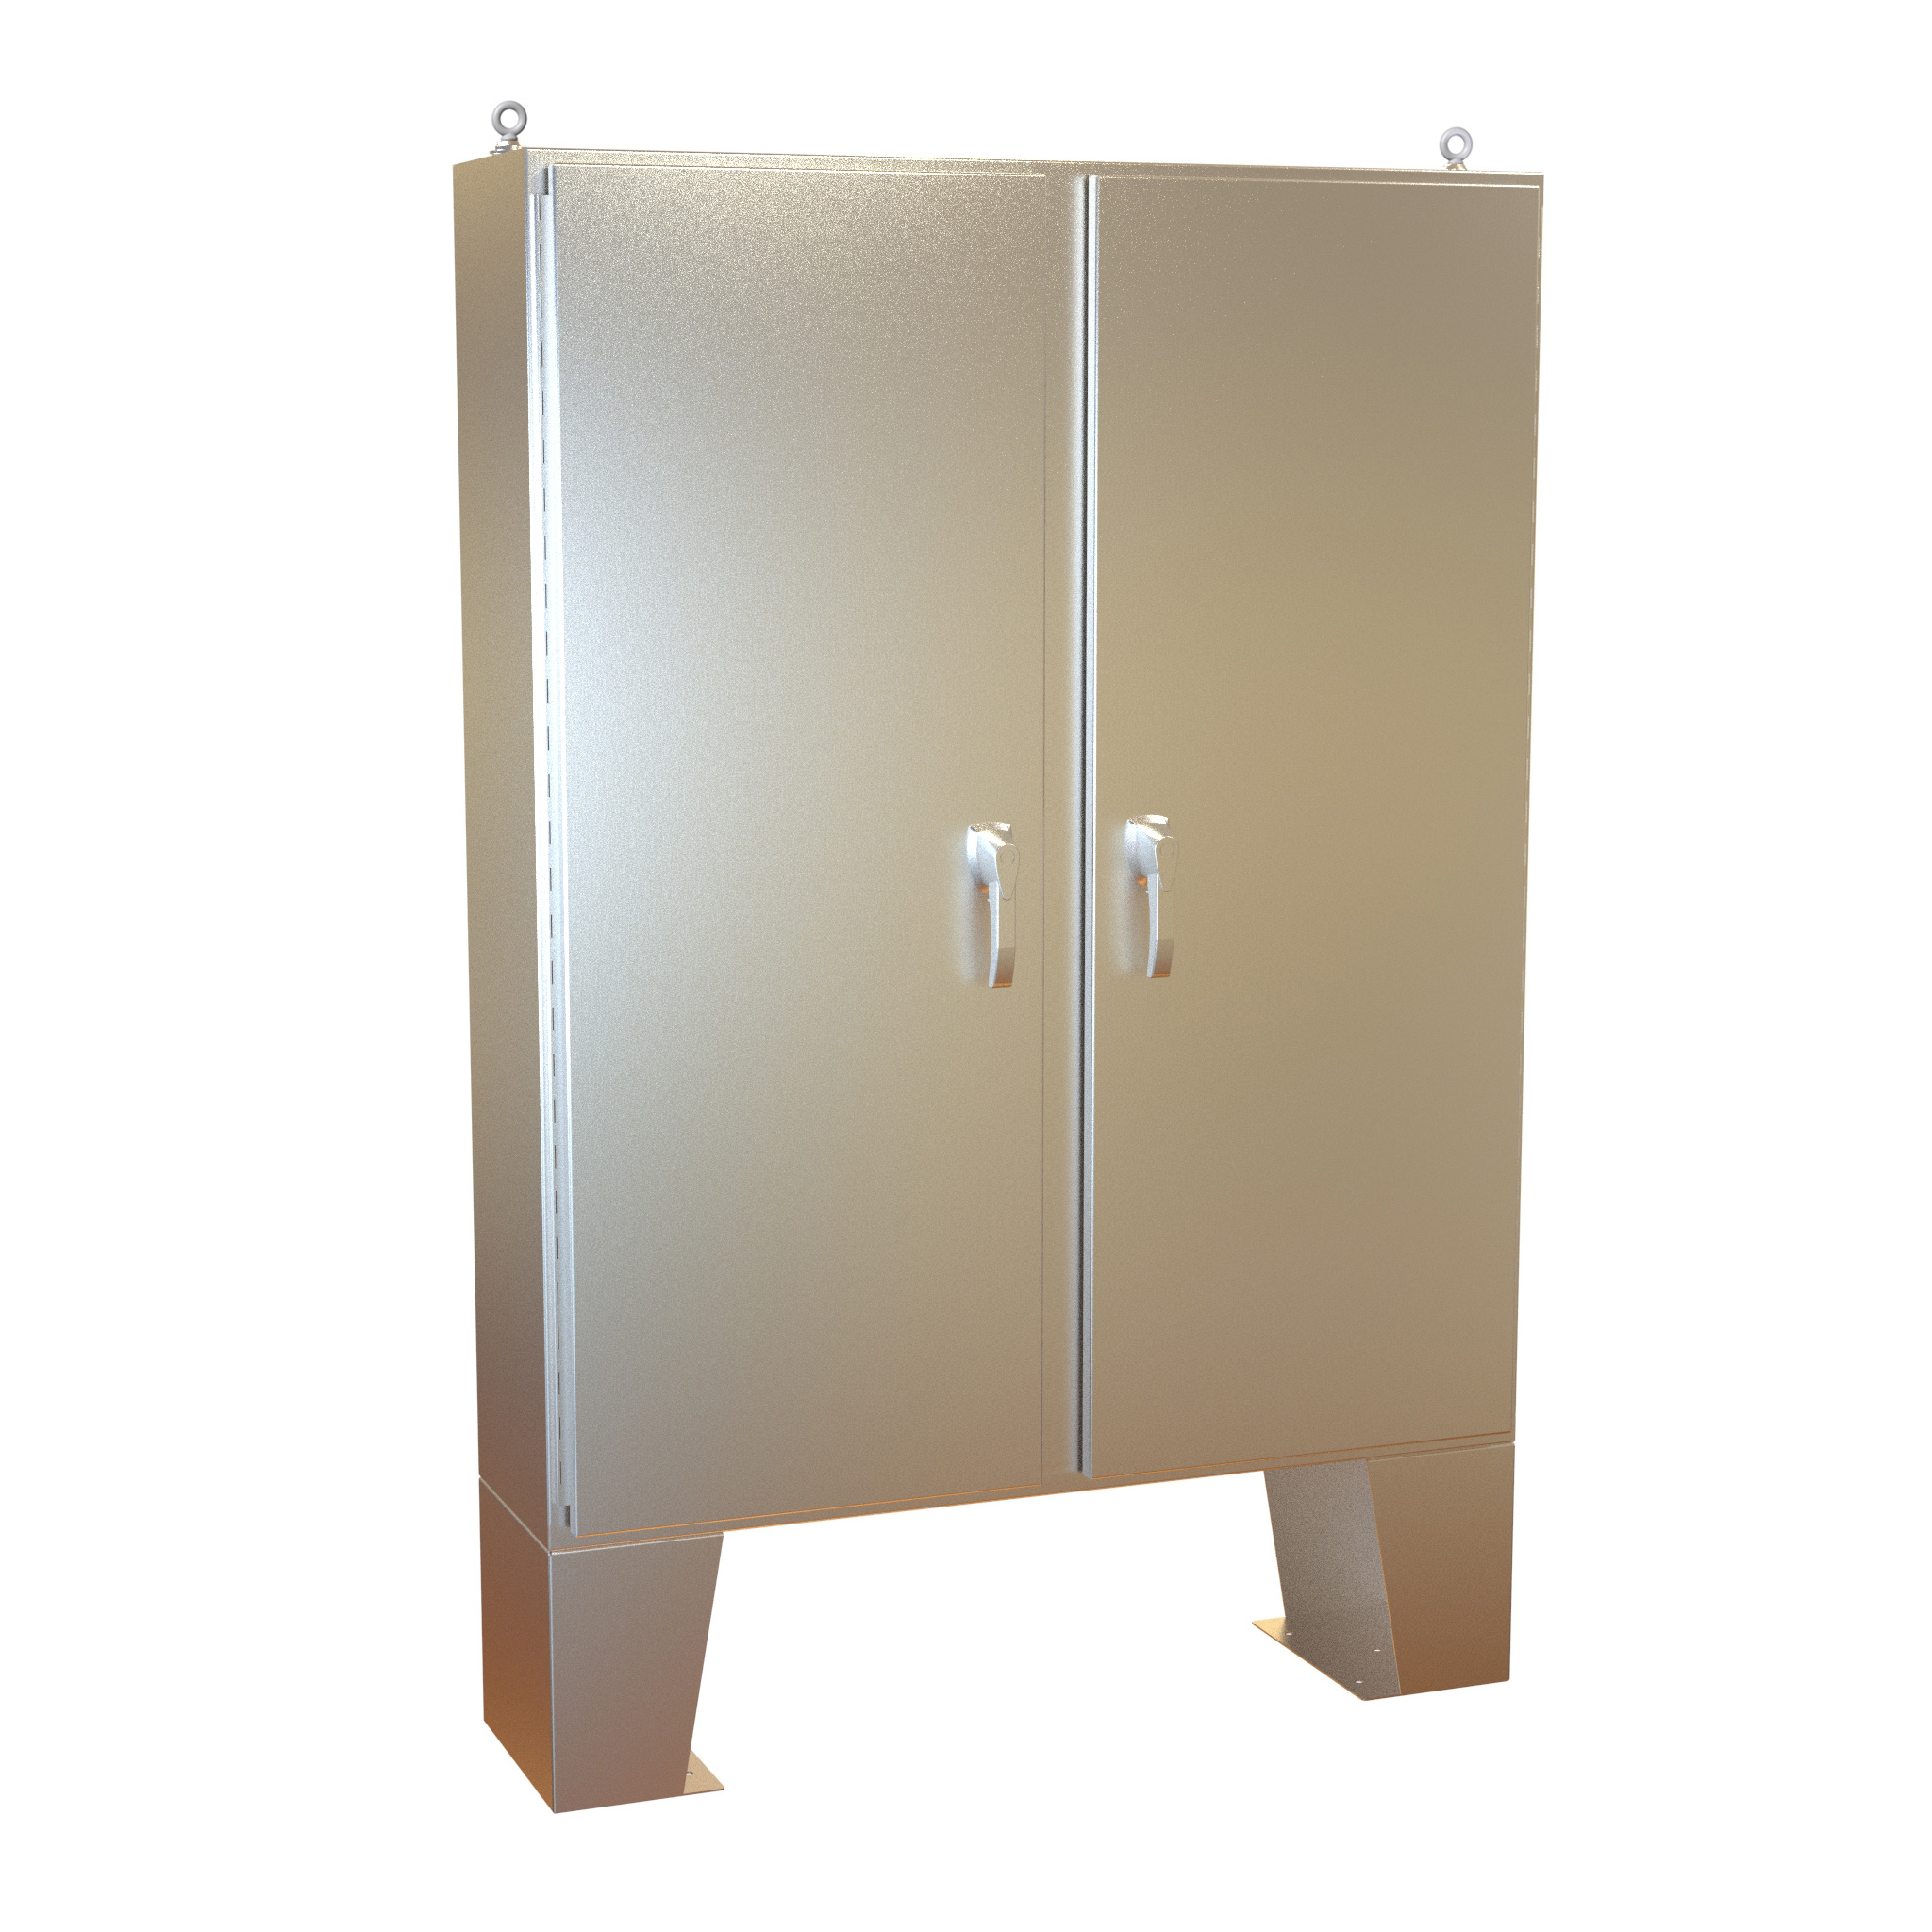 Hammond Manufacturing - Type 4X Stainless Steel Two Door Floormount Enclosure